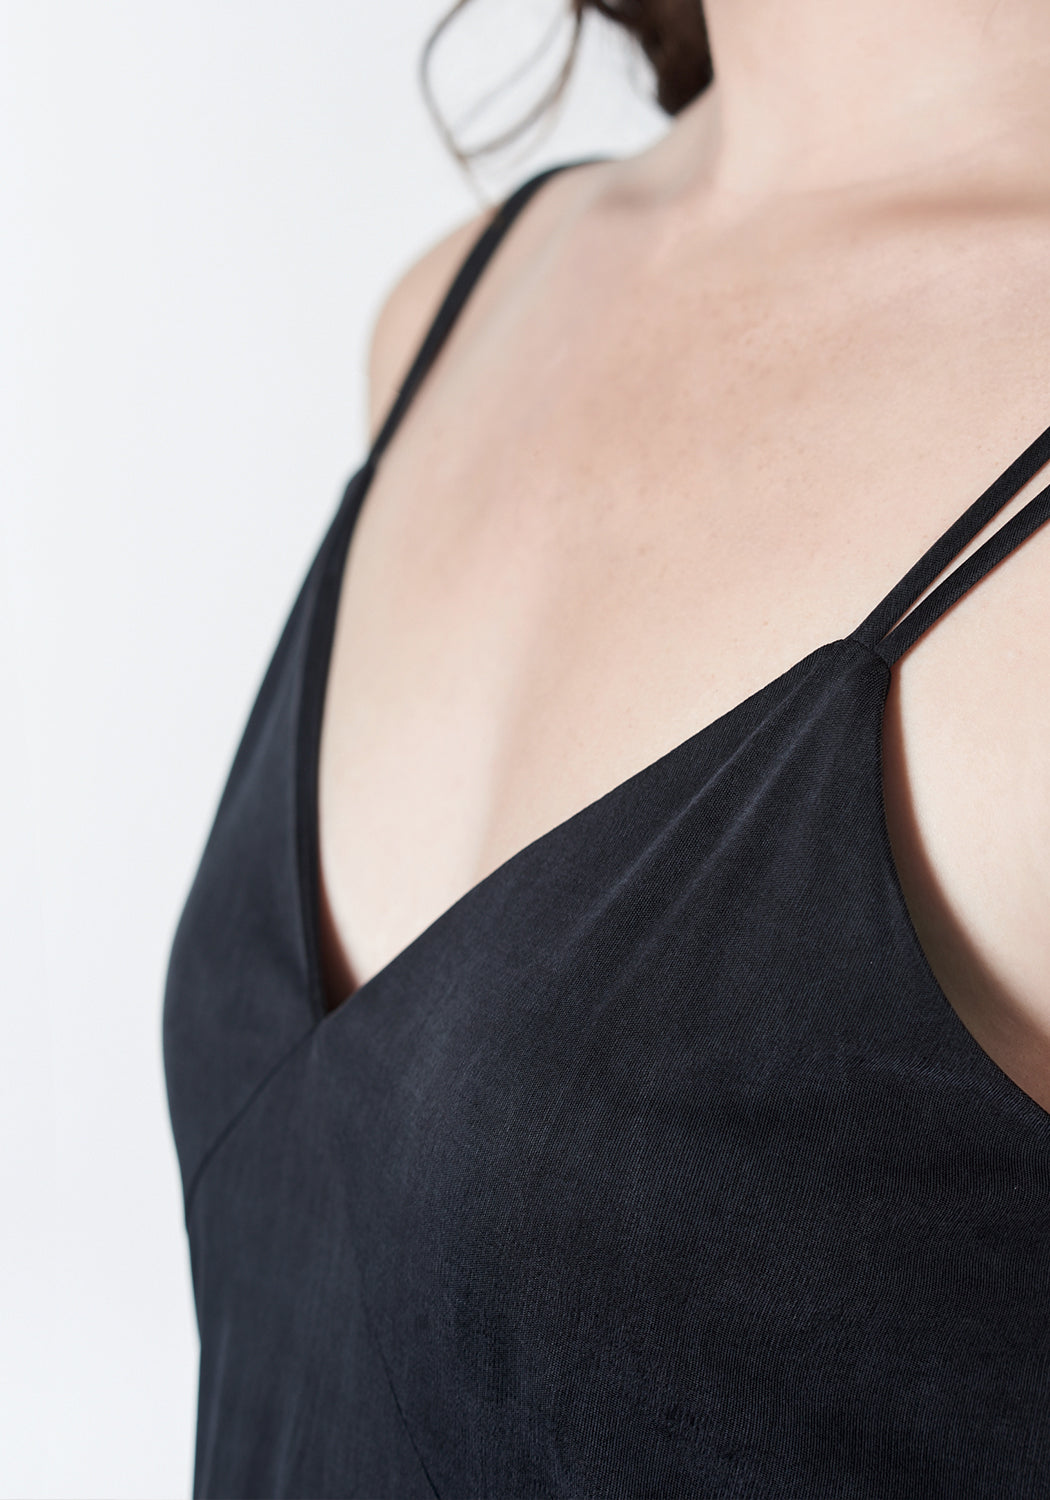 Soft black, midi-length, slip dress with slit.